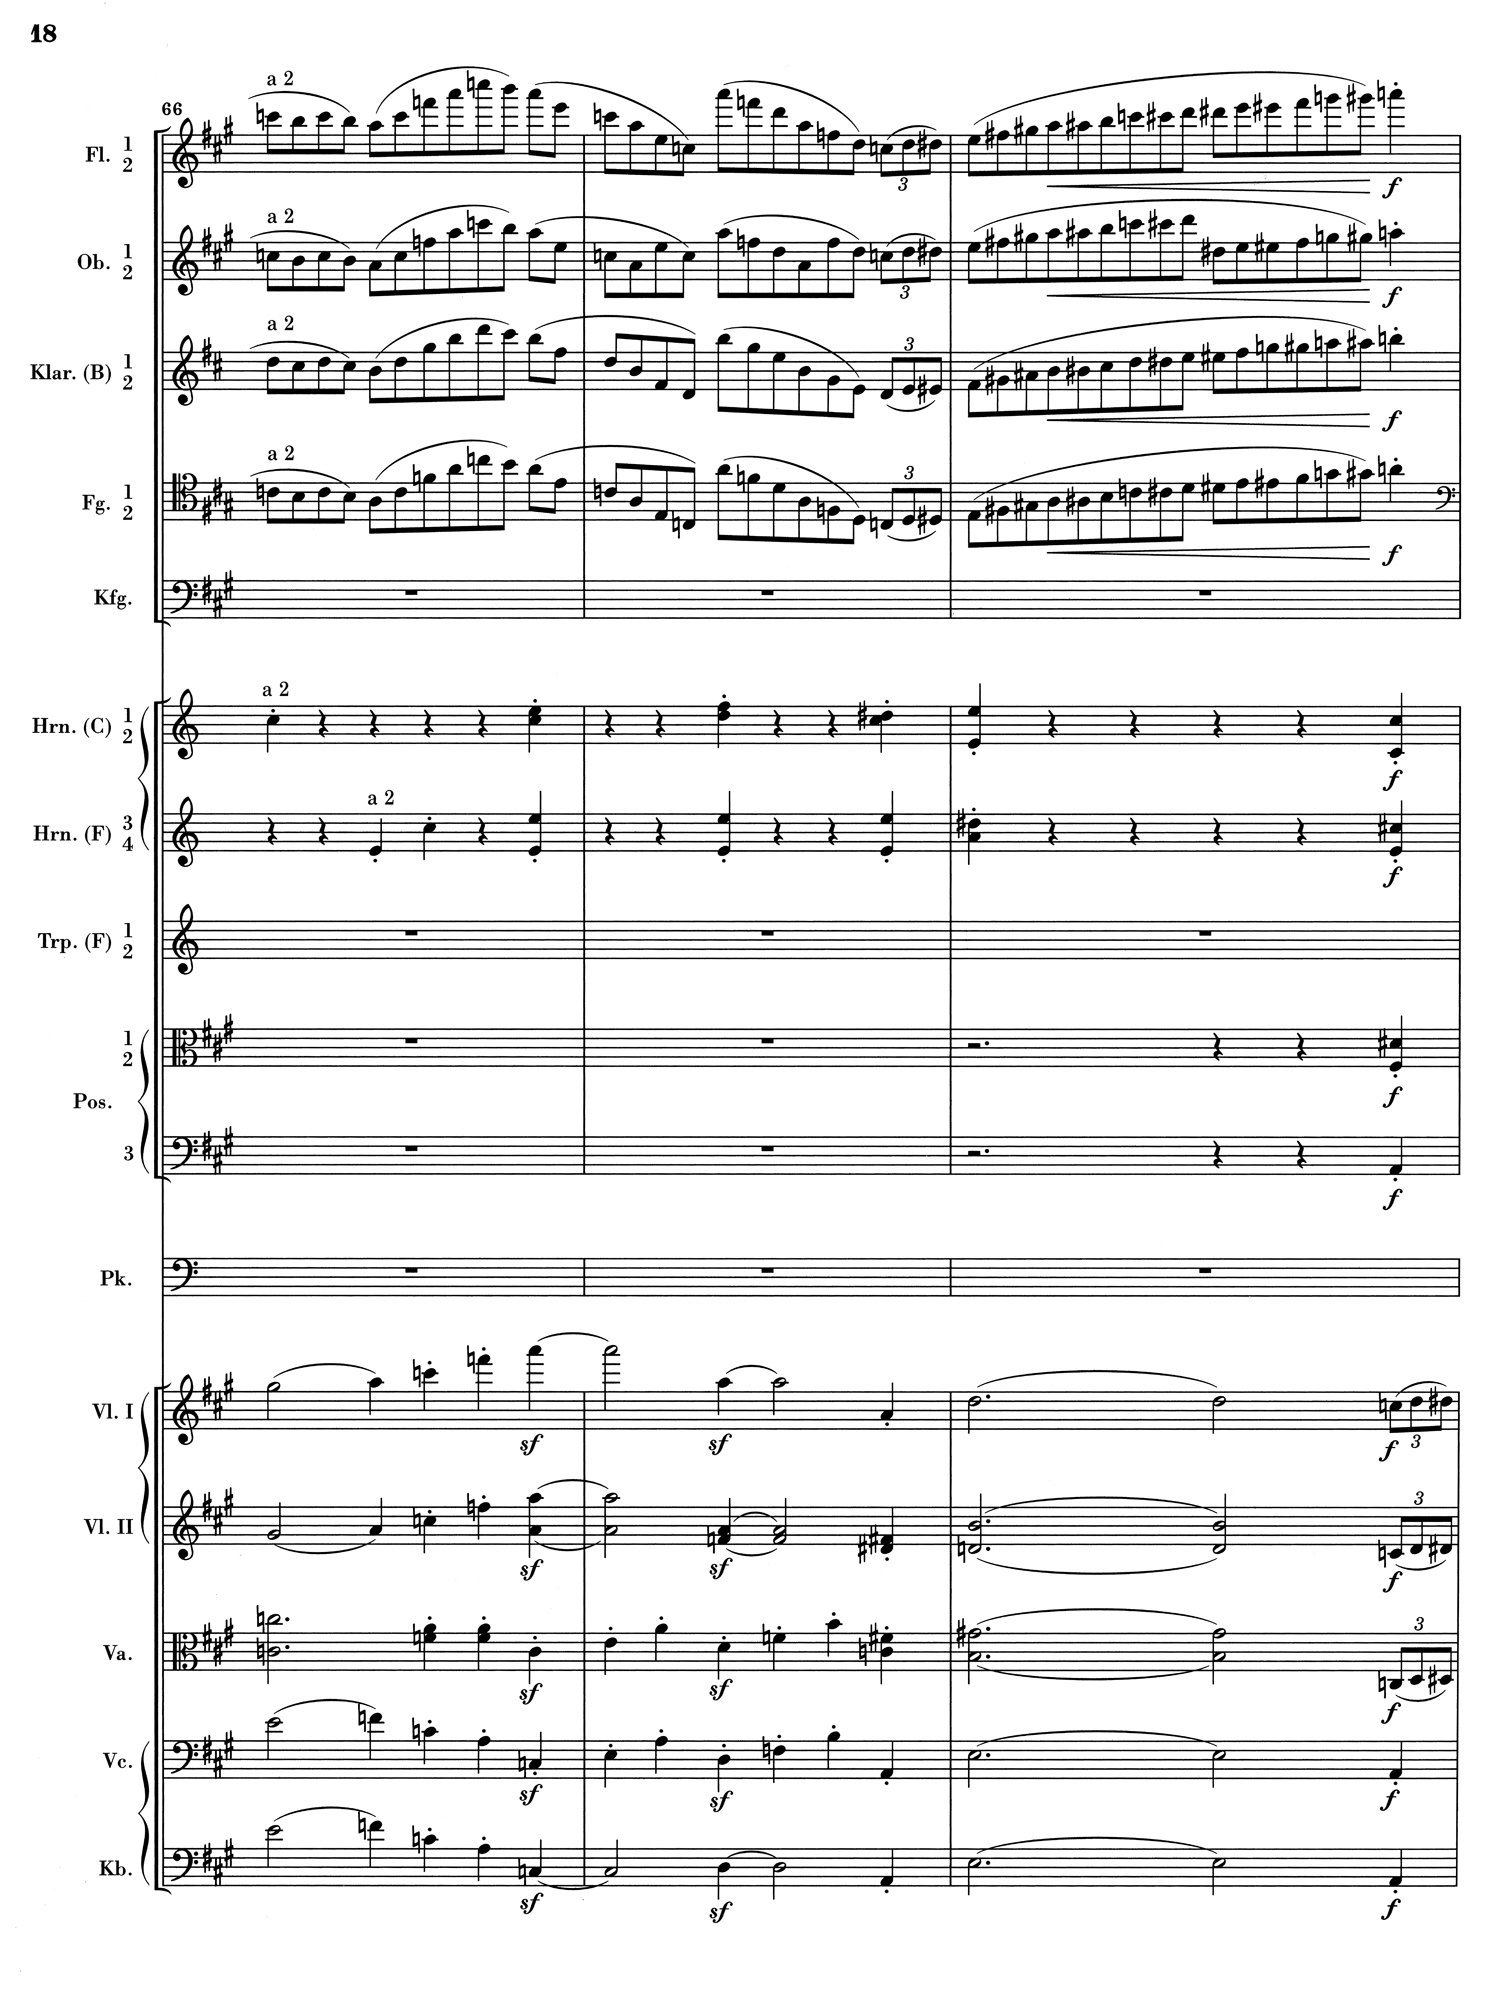 Brahms 3 Score 3.jpg